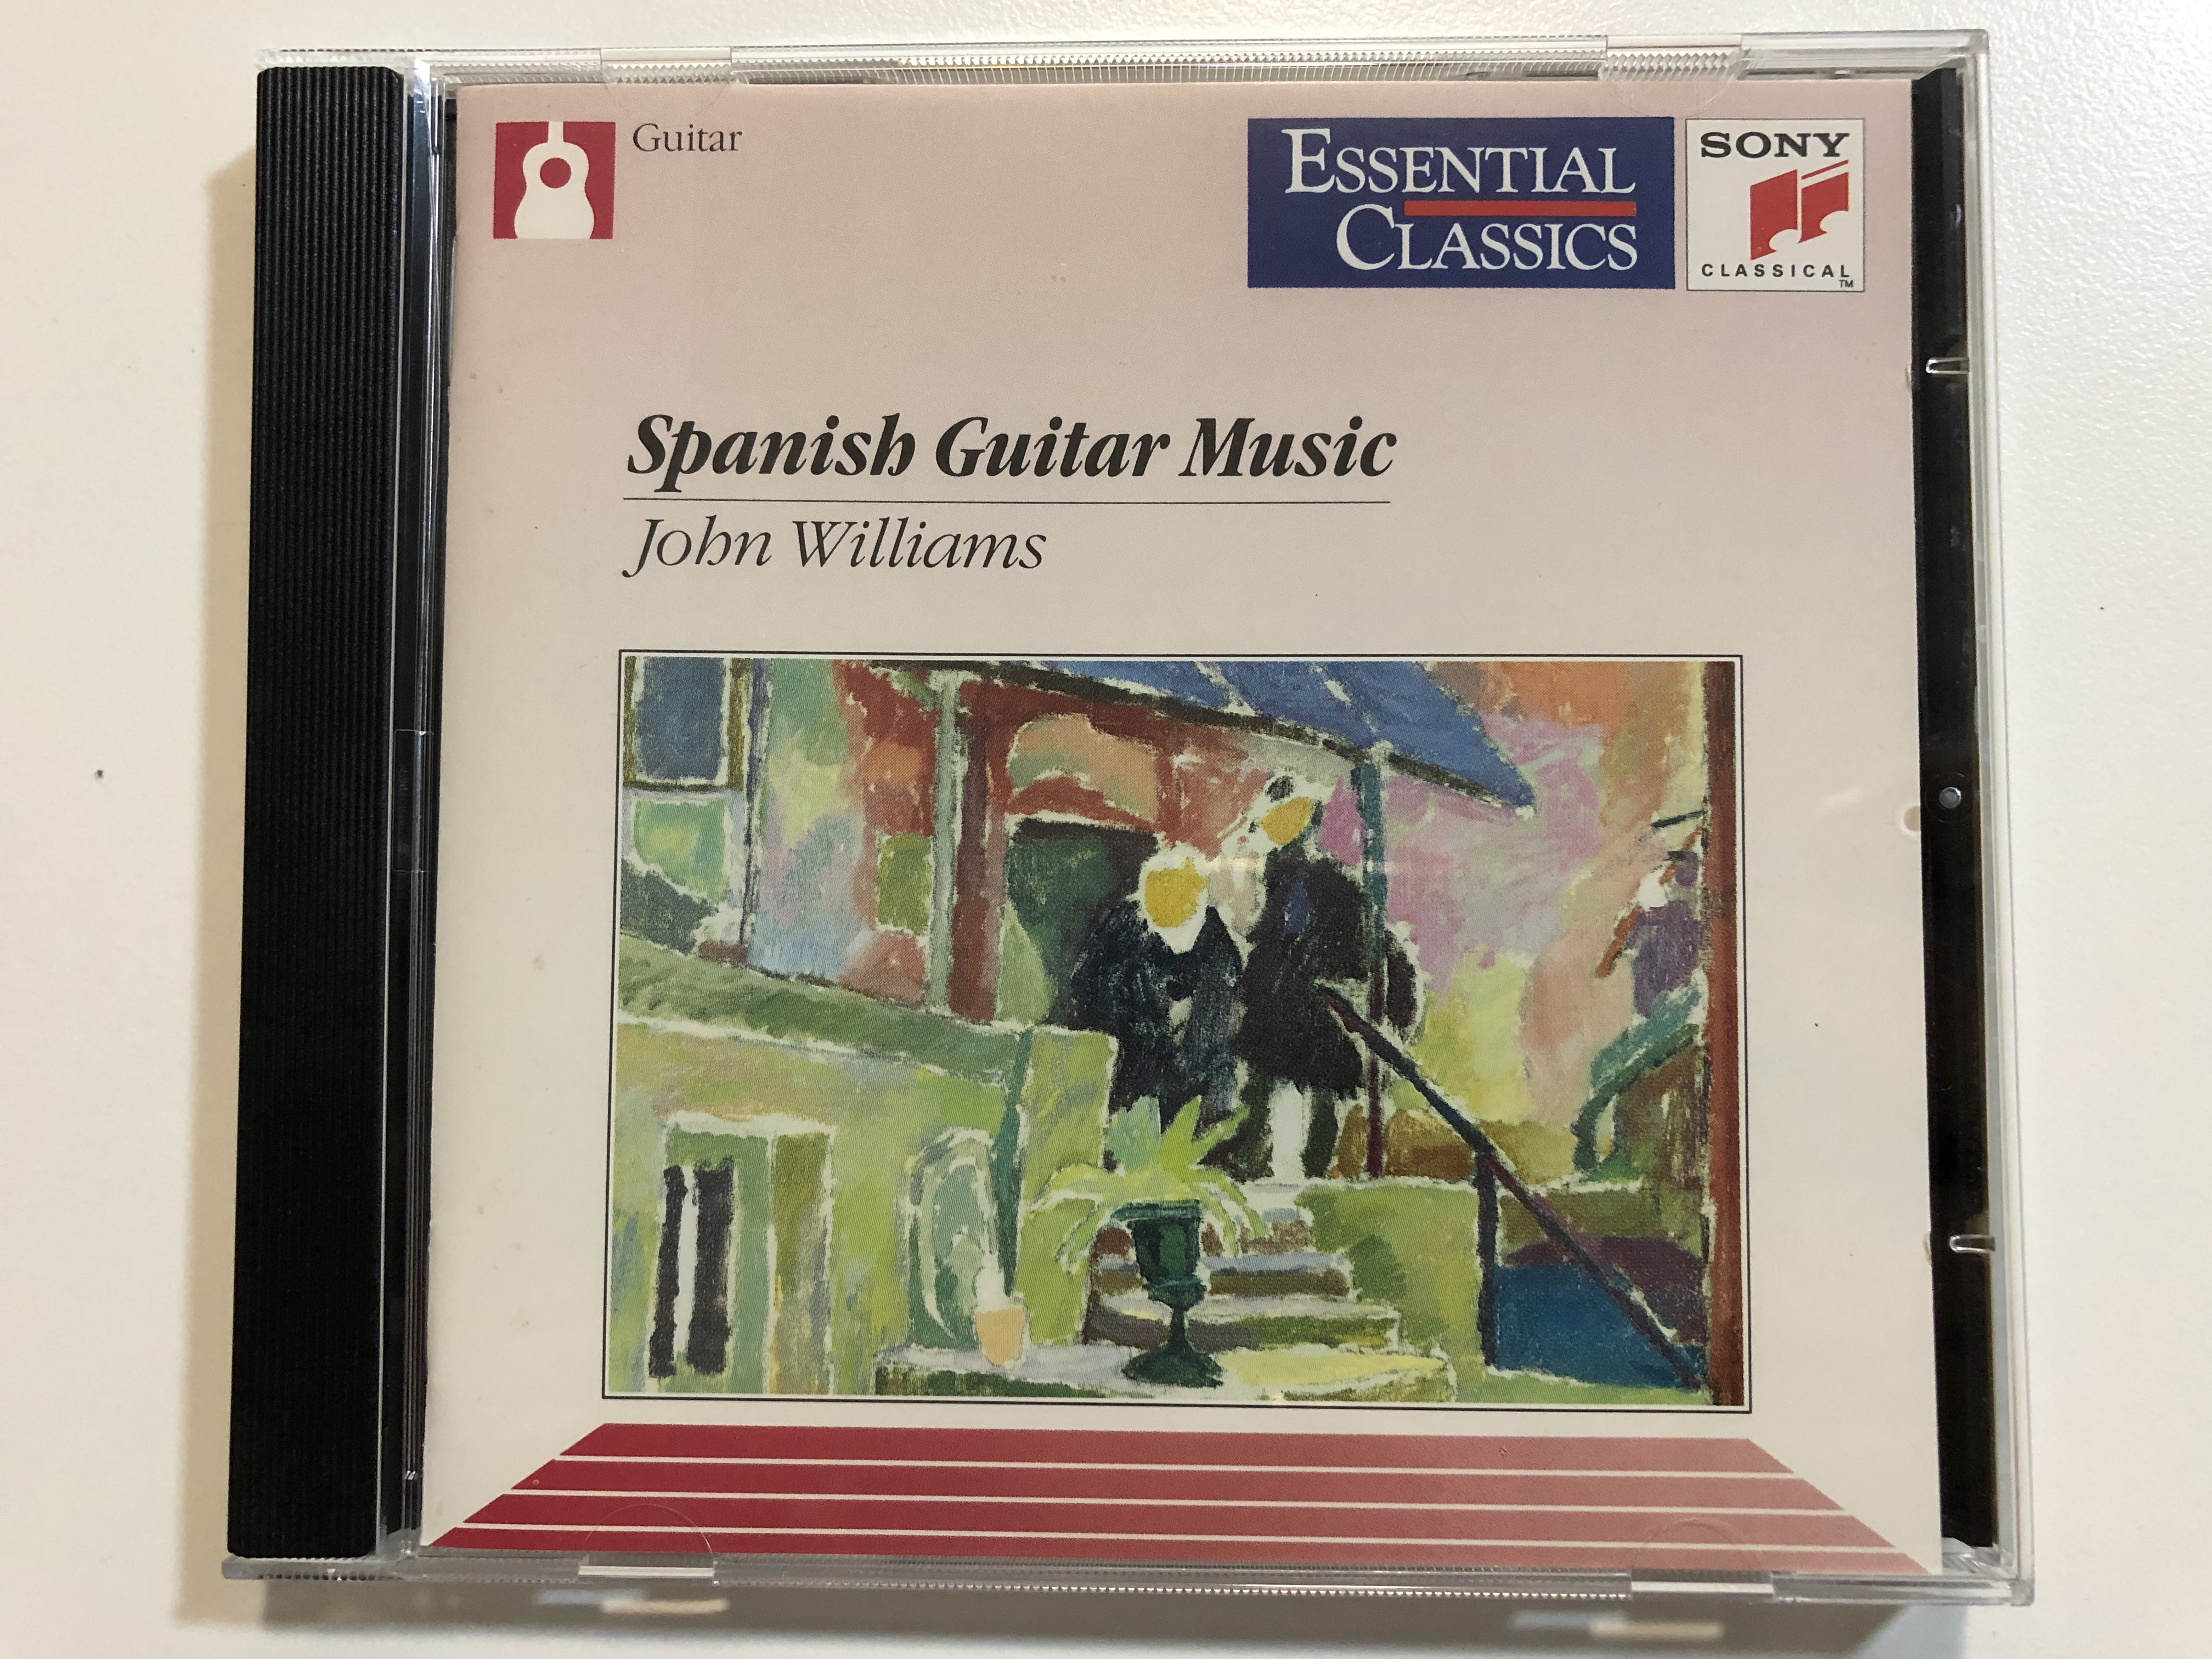 spanish-guitar-music-john-williams-essential-classics-guitar-sony-classical-audio-cd-1990-sbk-46-347-1-.jpg